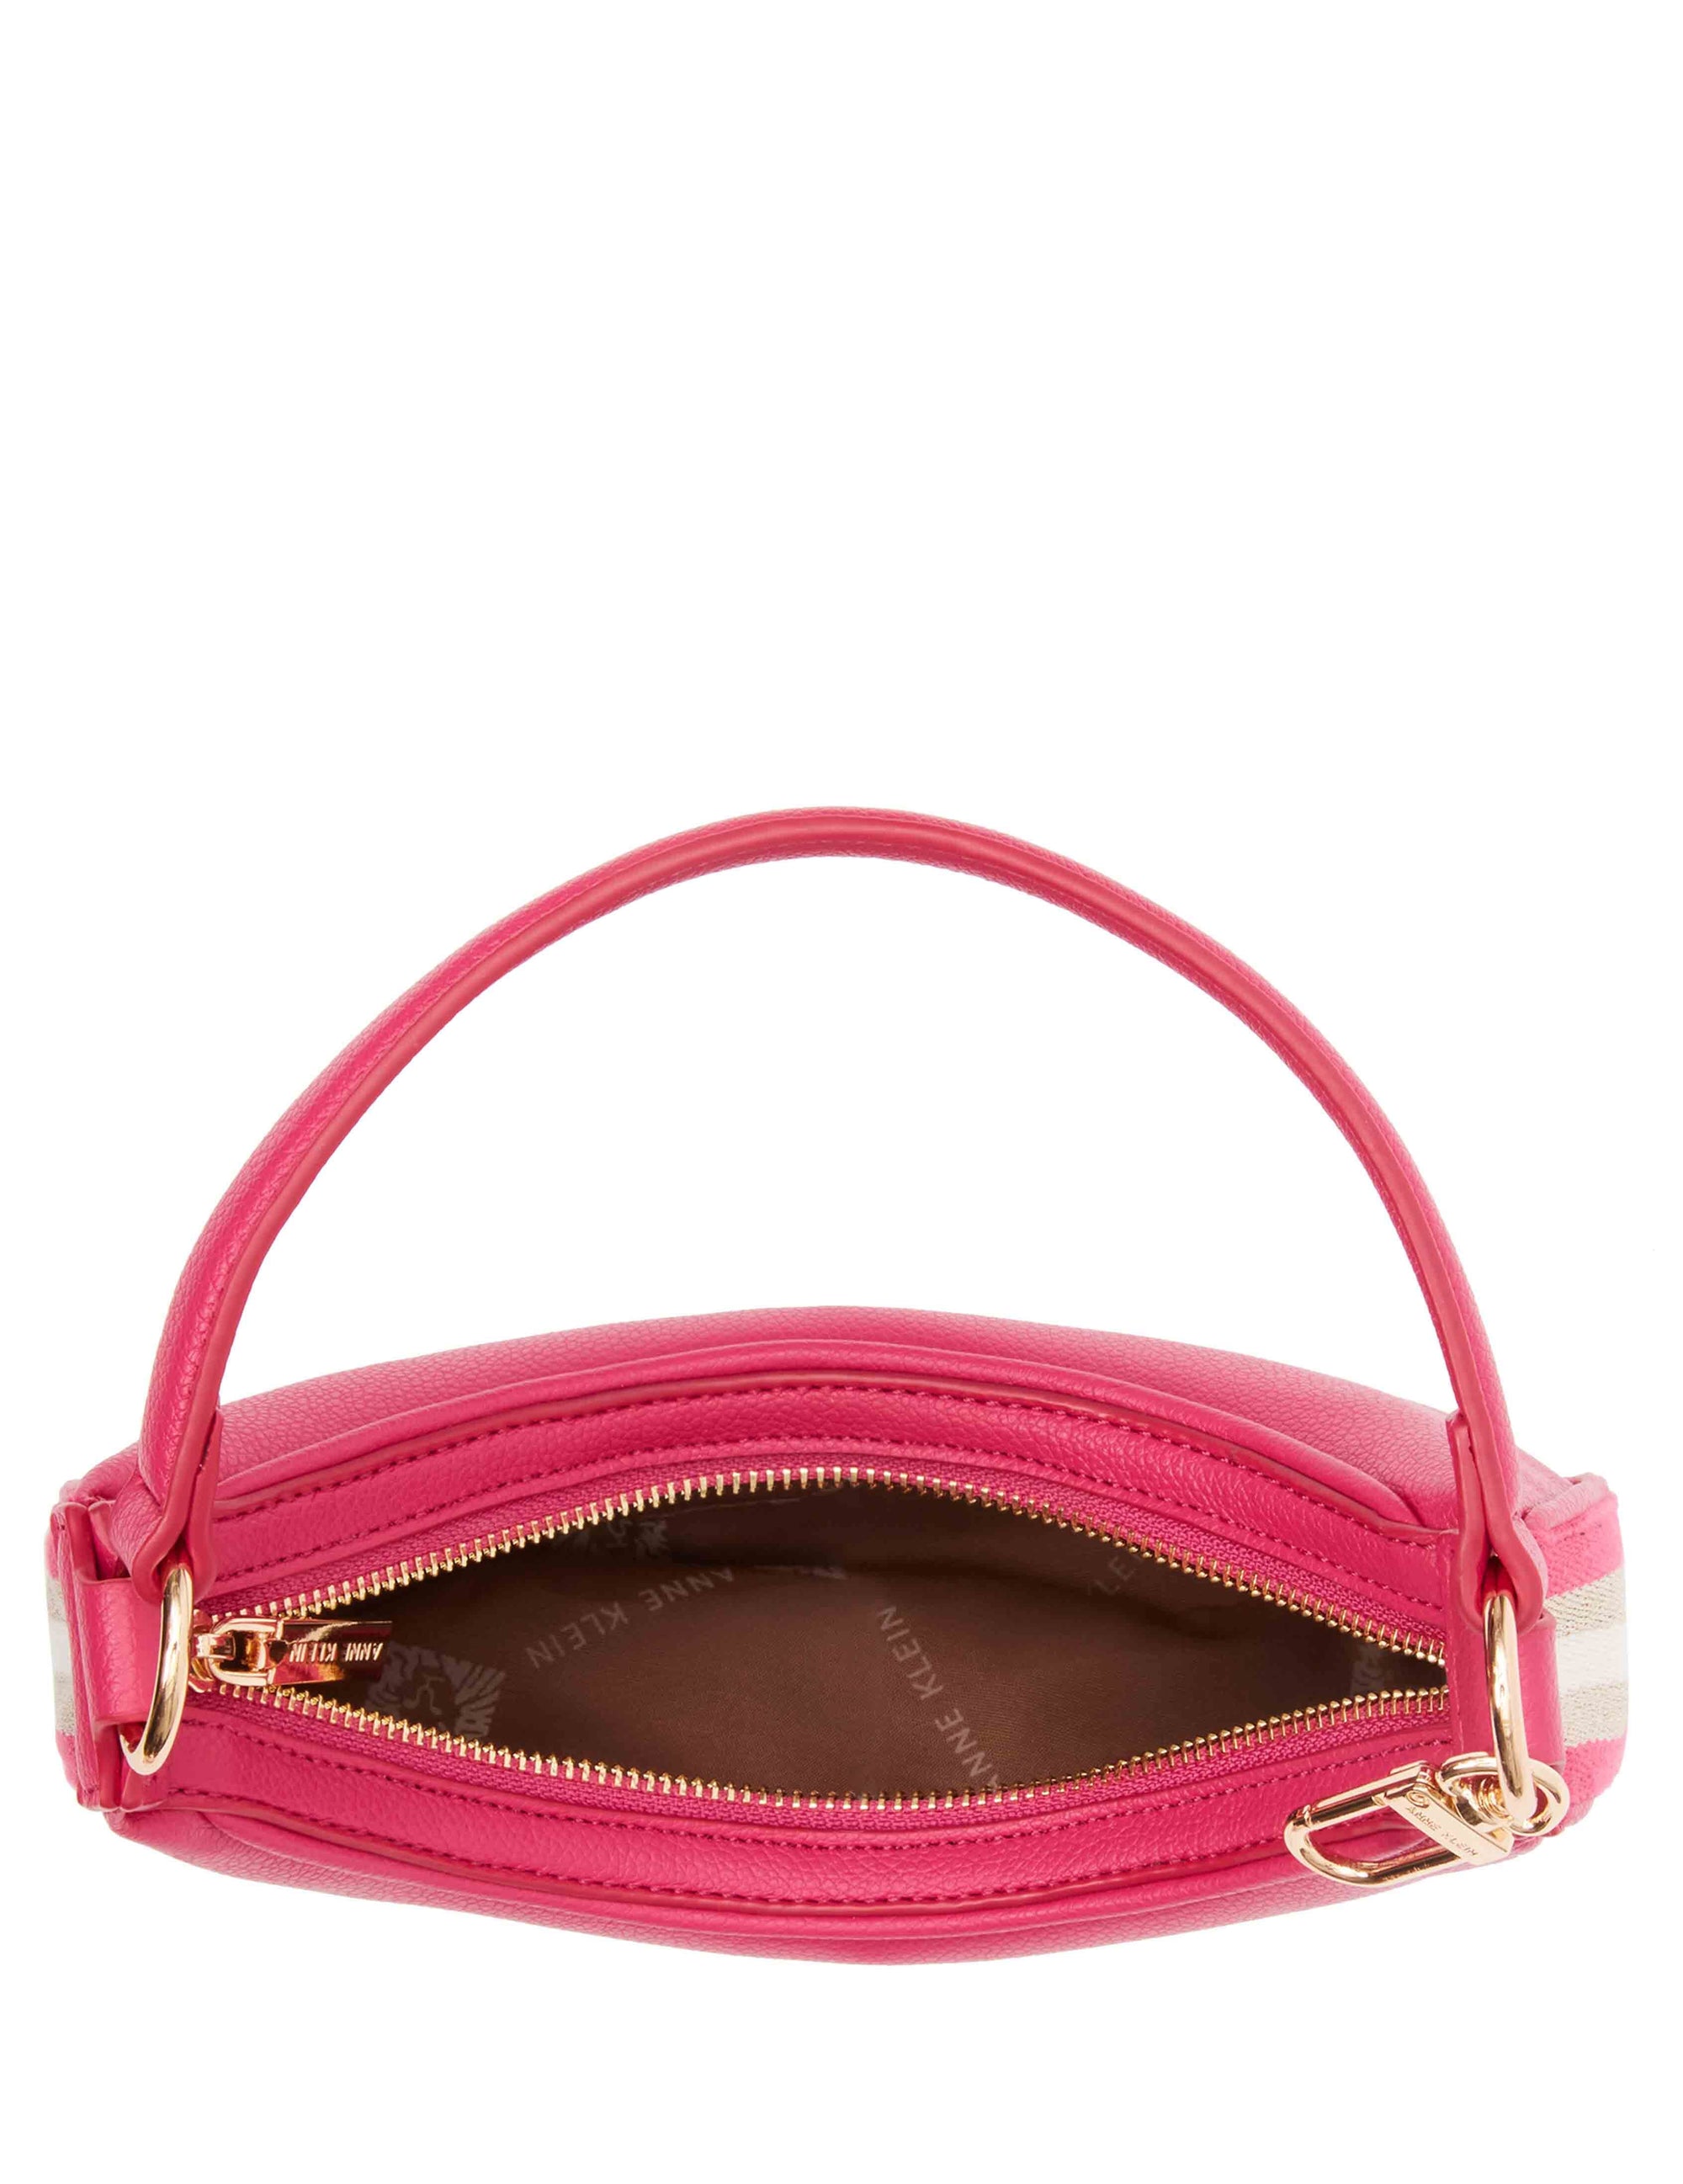 Anne Klein Convertible Shoulder Bag with Web Strap - Pink